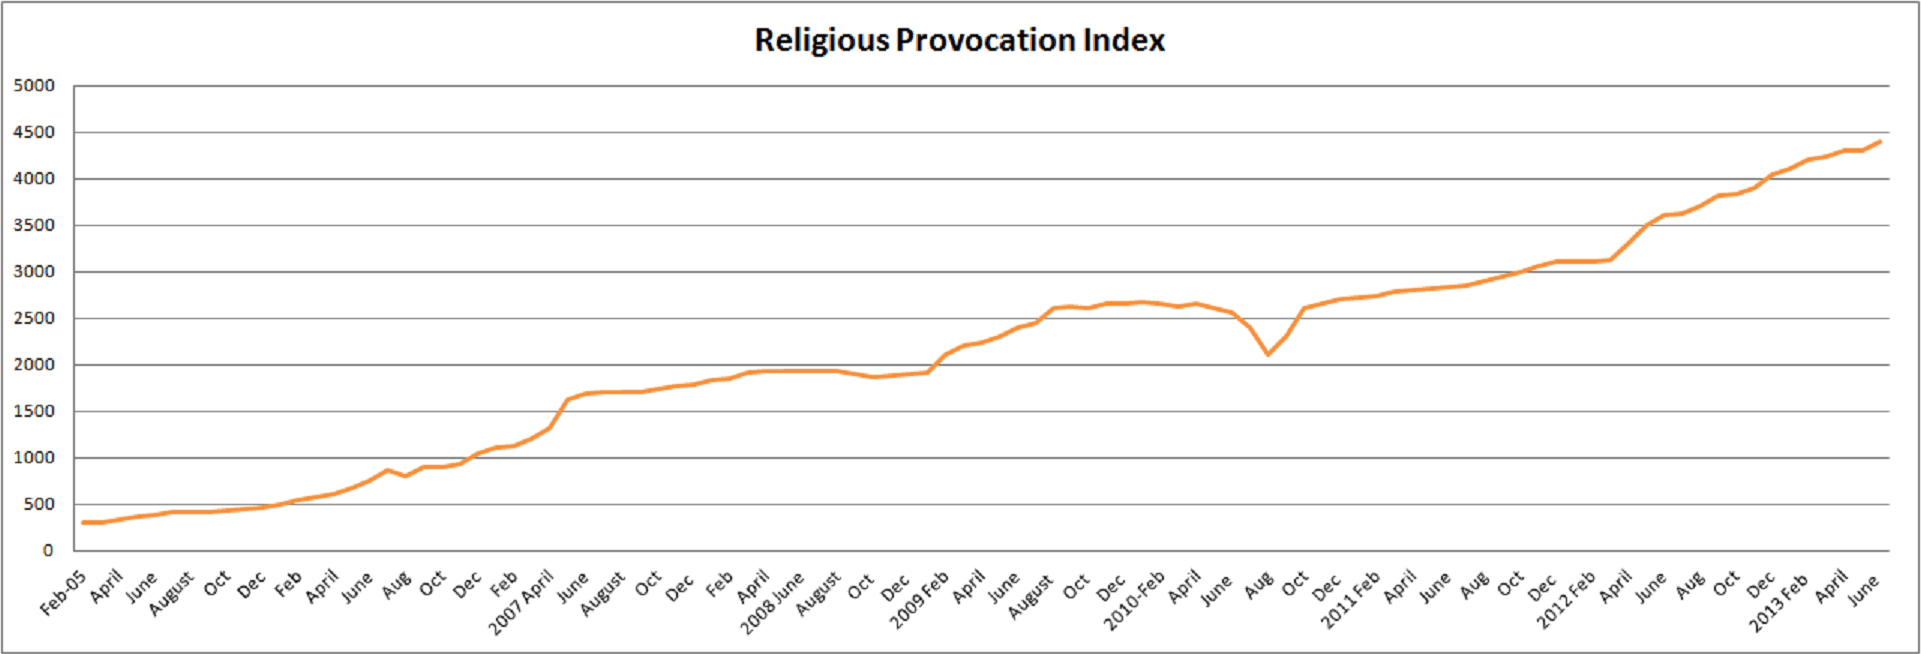 Religious Provocation Index June 2014